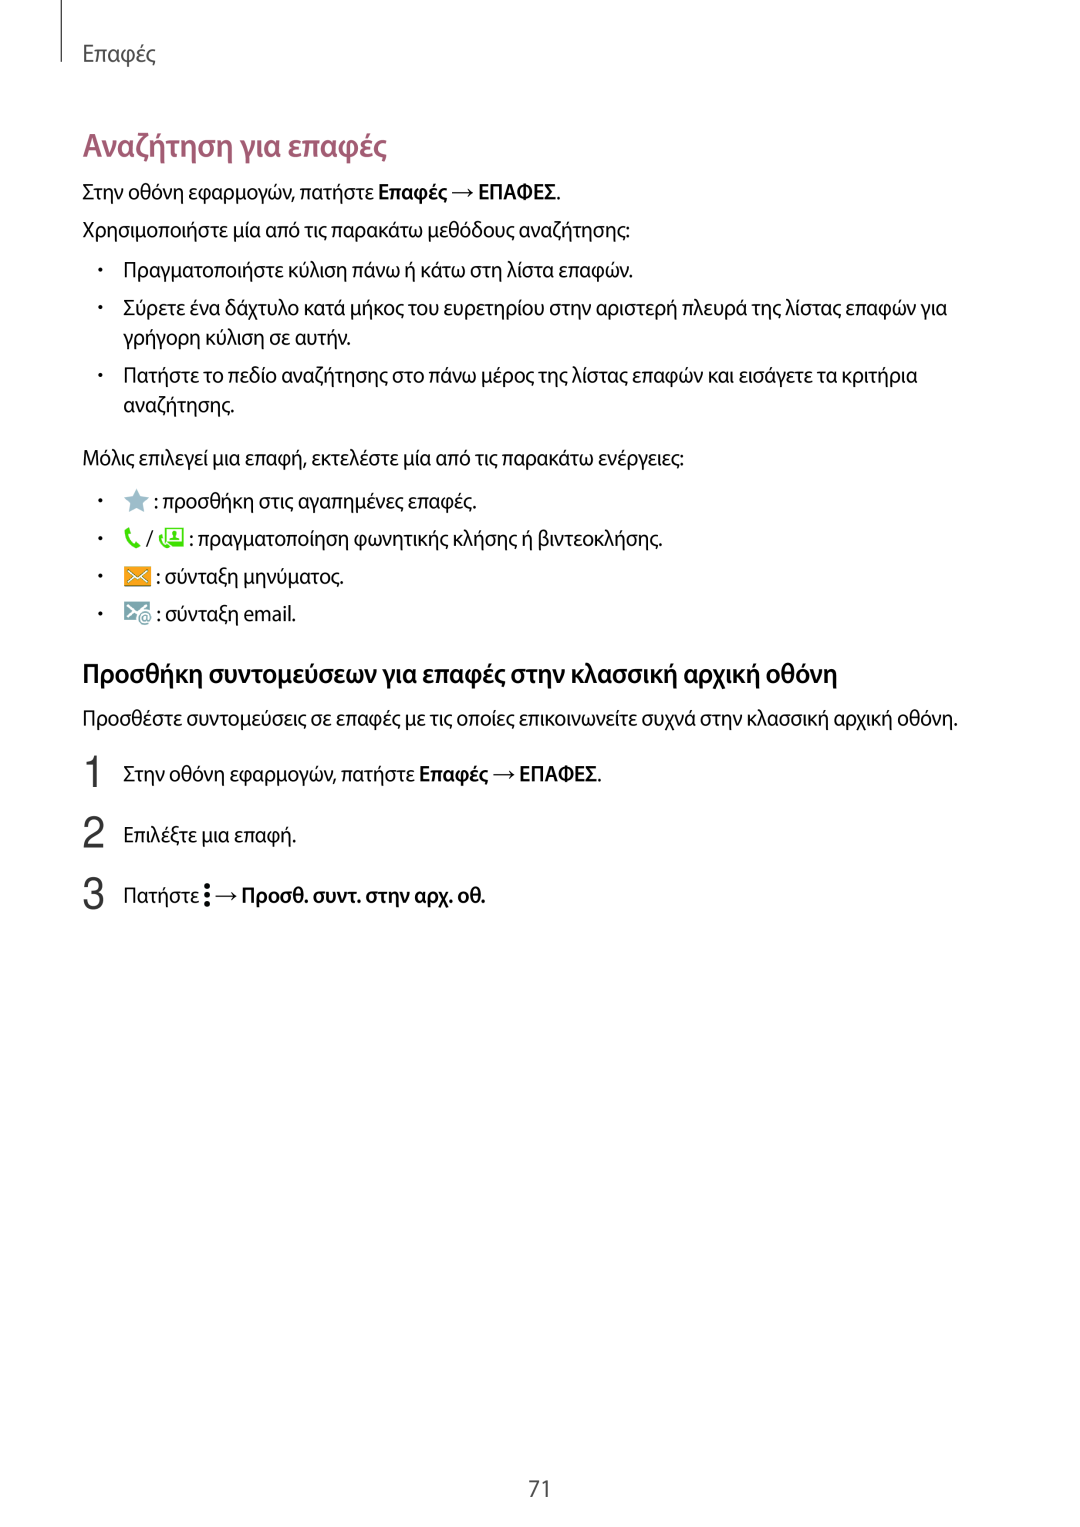 Samsung SM-T805NZWAEUR manual Αναζήτηση για επαφές, Προσθήκη συντομεύσεων για επαφές στην κλασσική αρχική οθόνη, Επαφές 